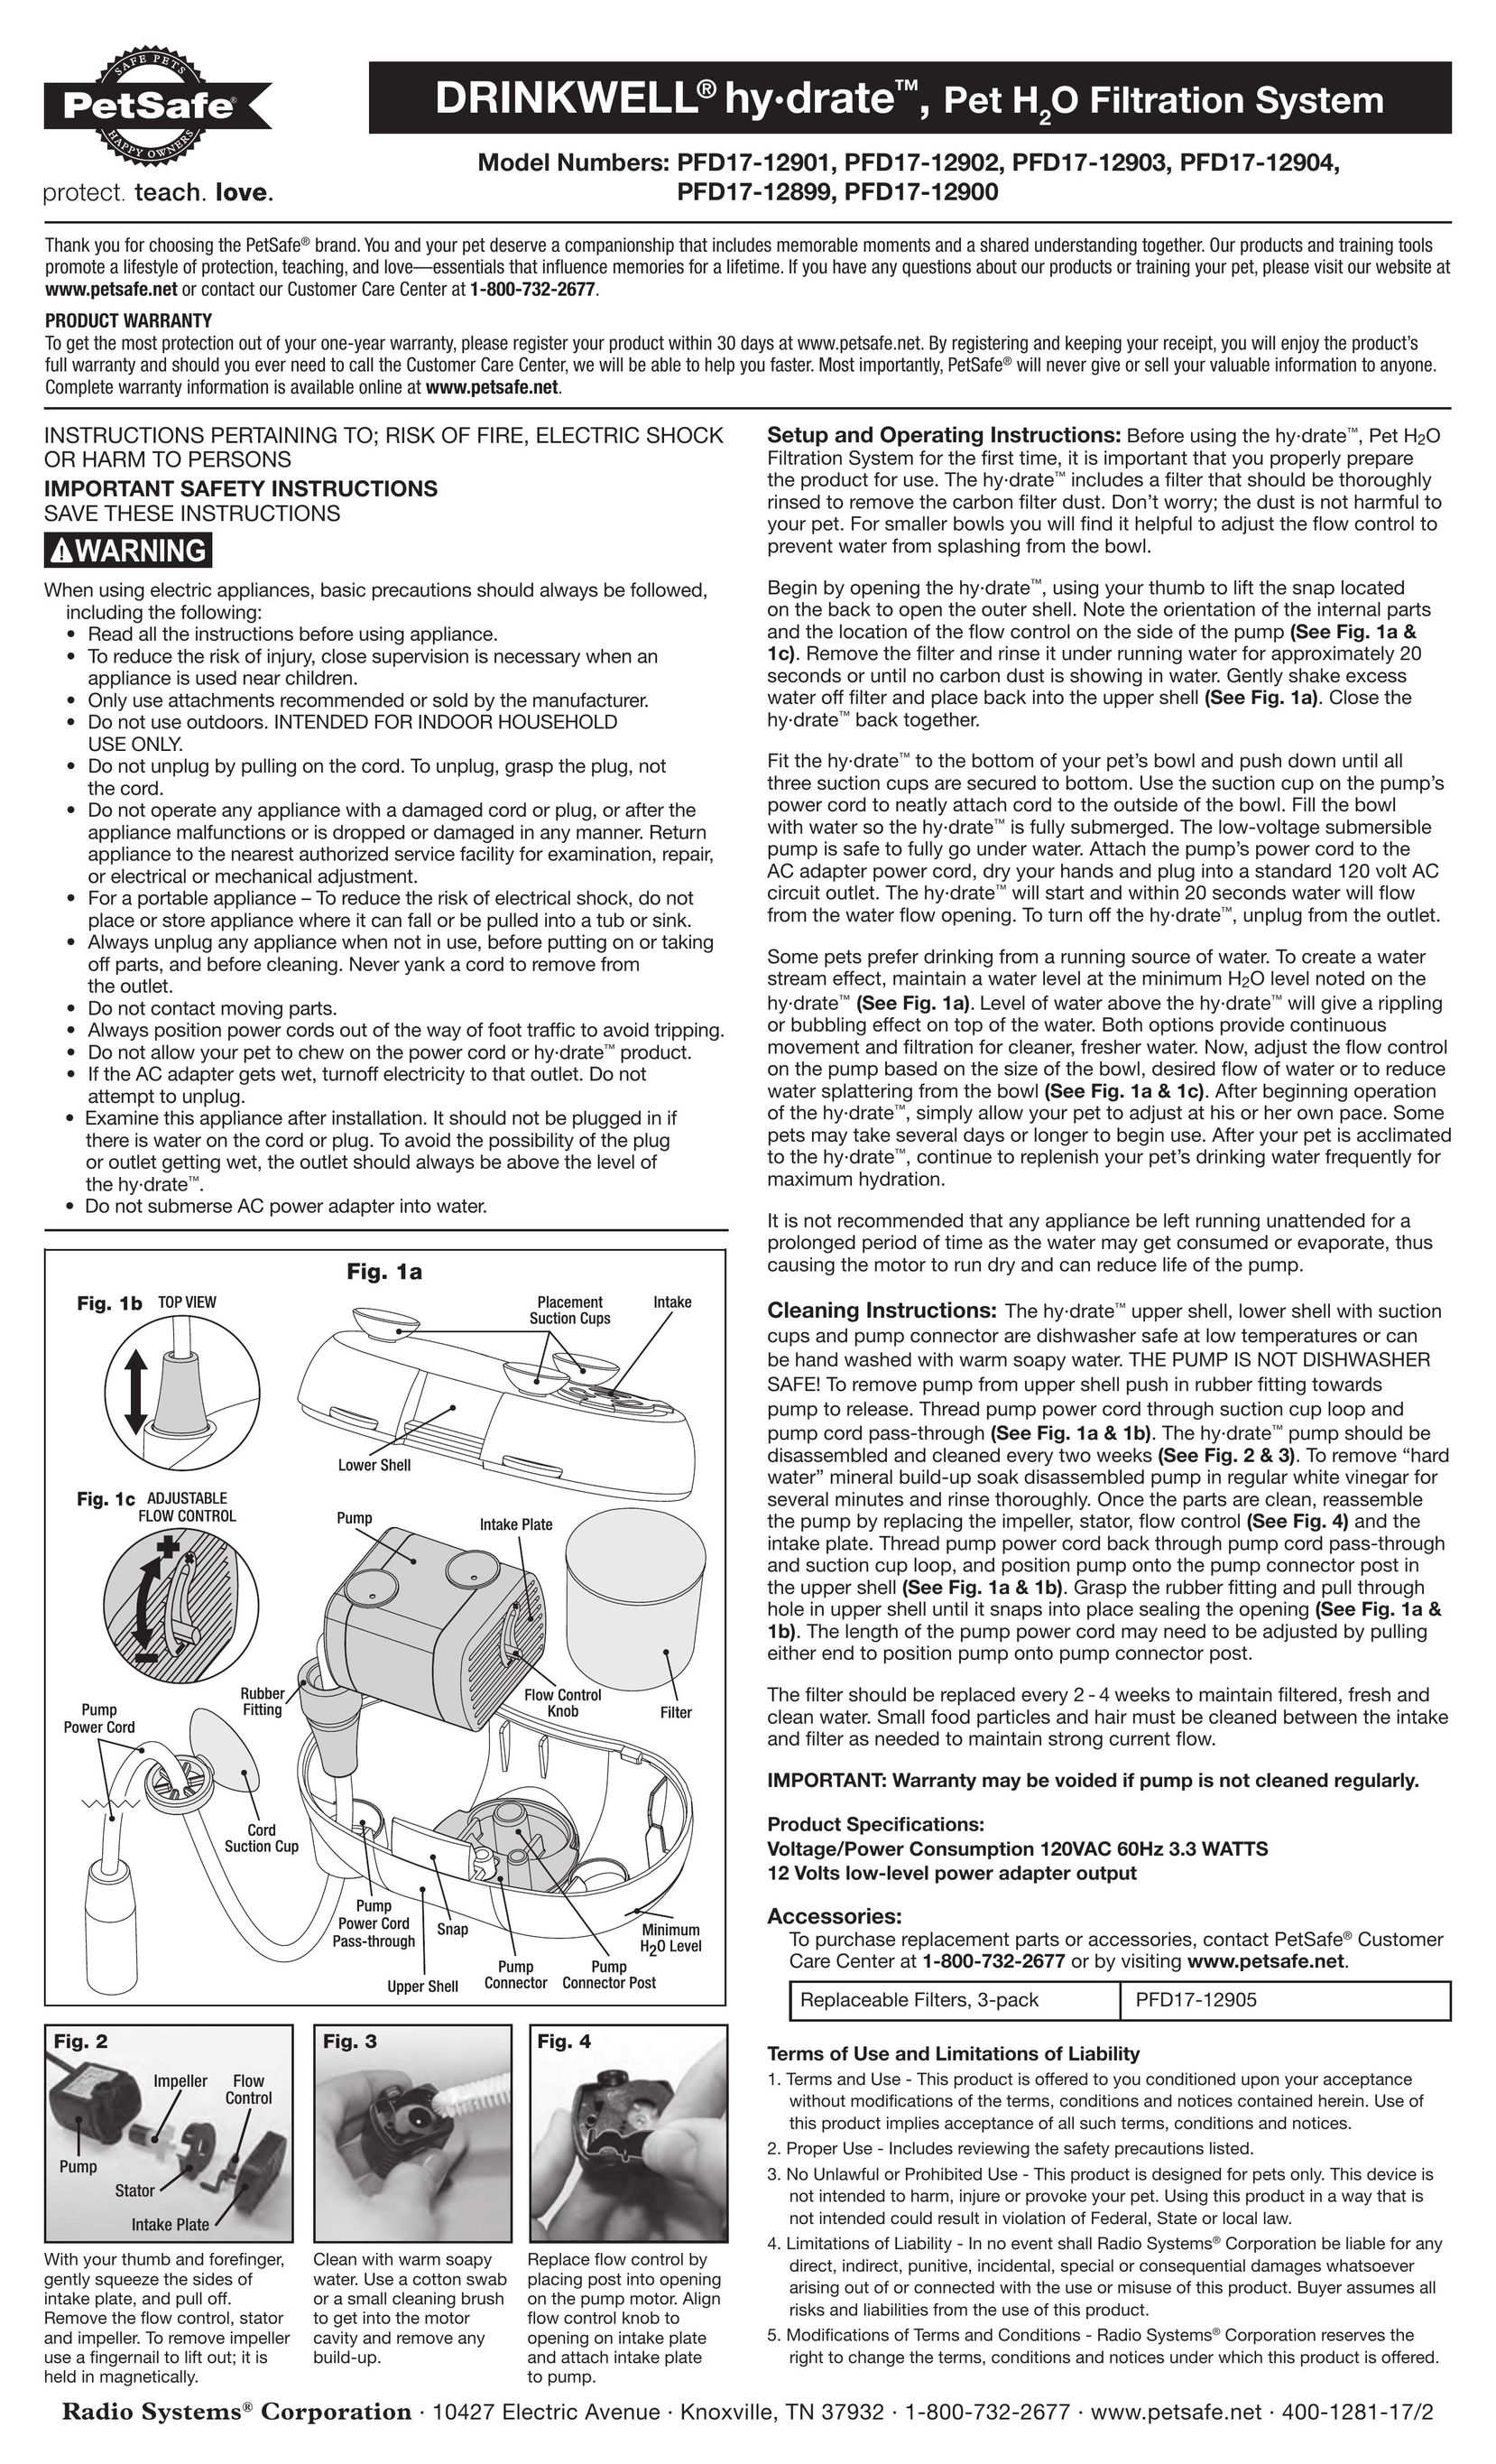 Petsafe PFD17-12904 Water System User Manual